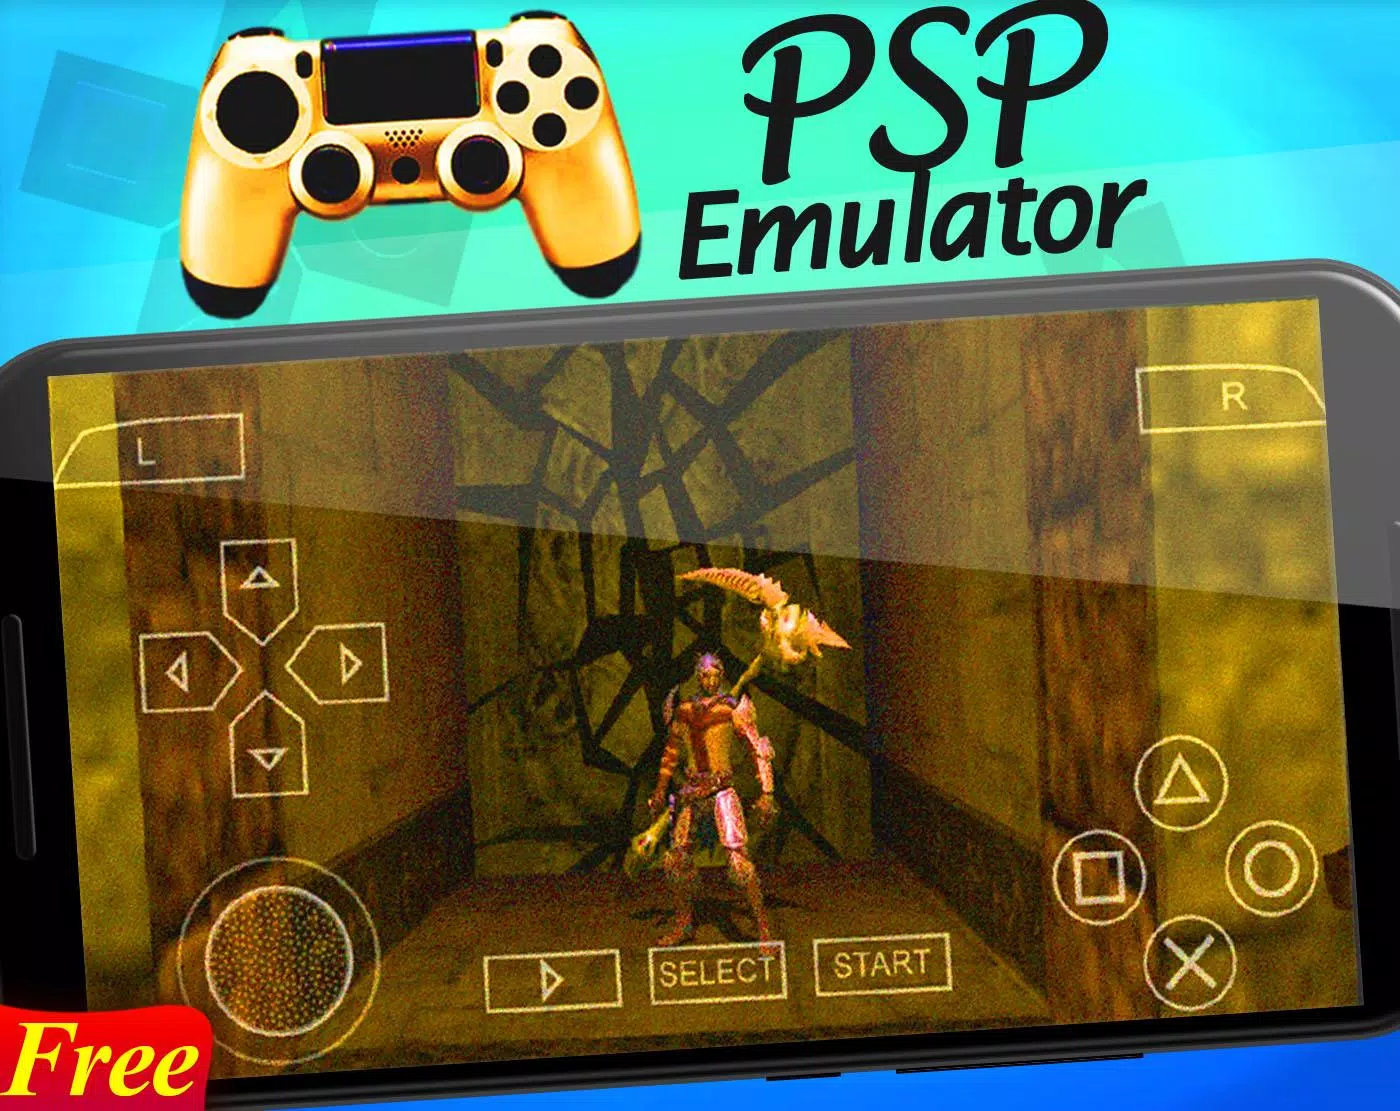 herhaling factor Telegraaf Best Emulator For PSP : Play PSP Games On Android APK for Android Download